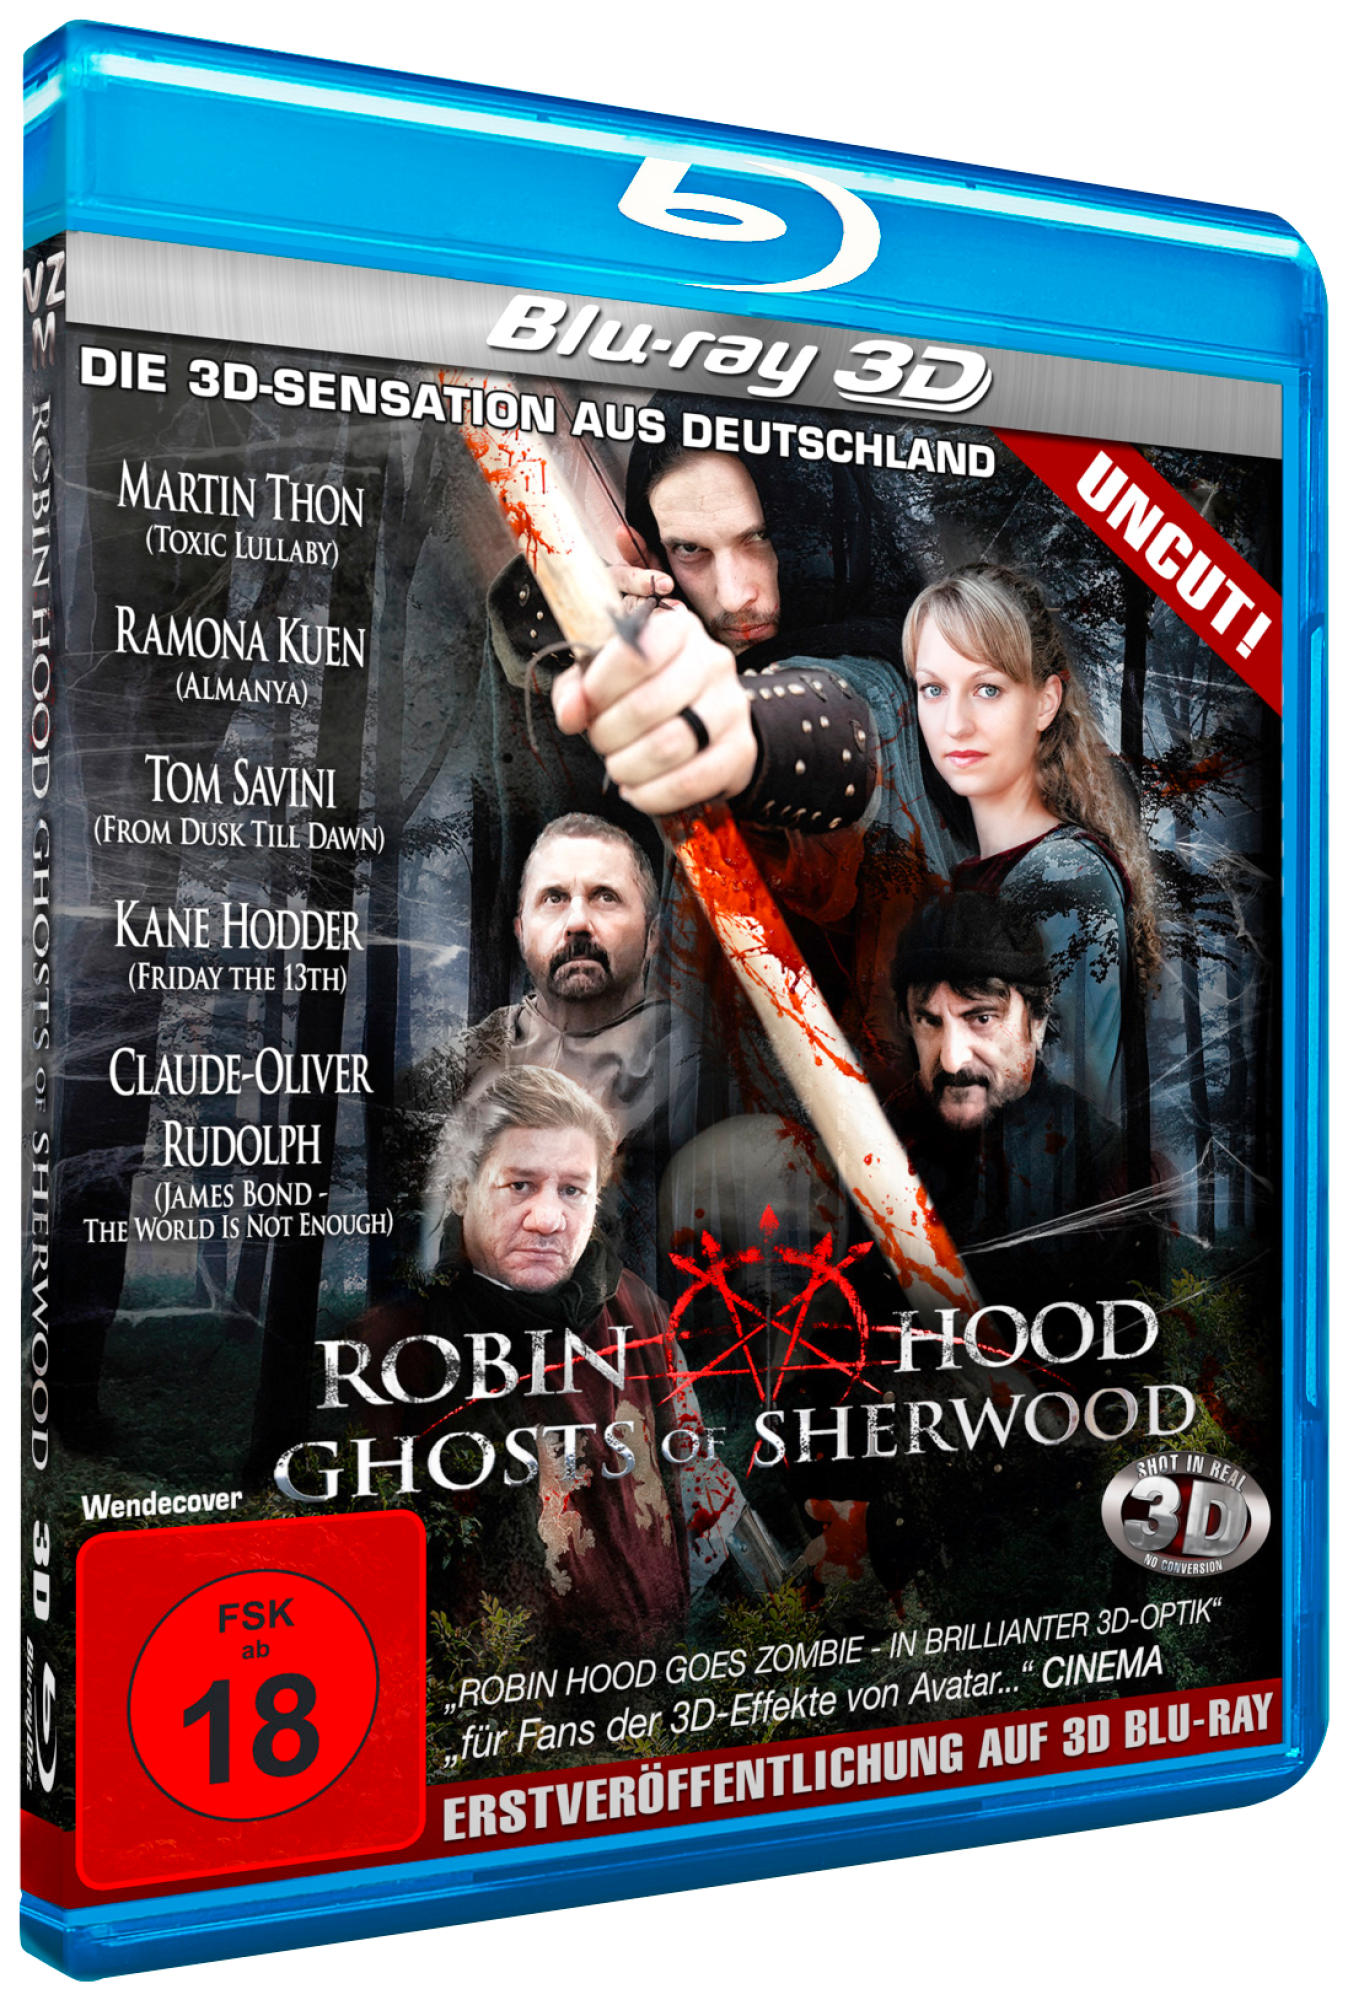 Robin Hood: Ghosts of Sherwood + 2 Brillen) (3D Blu-ray